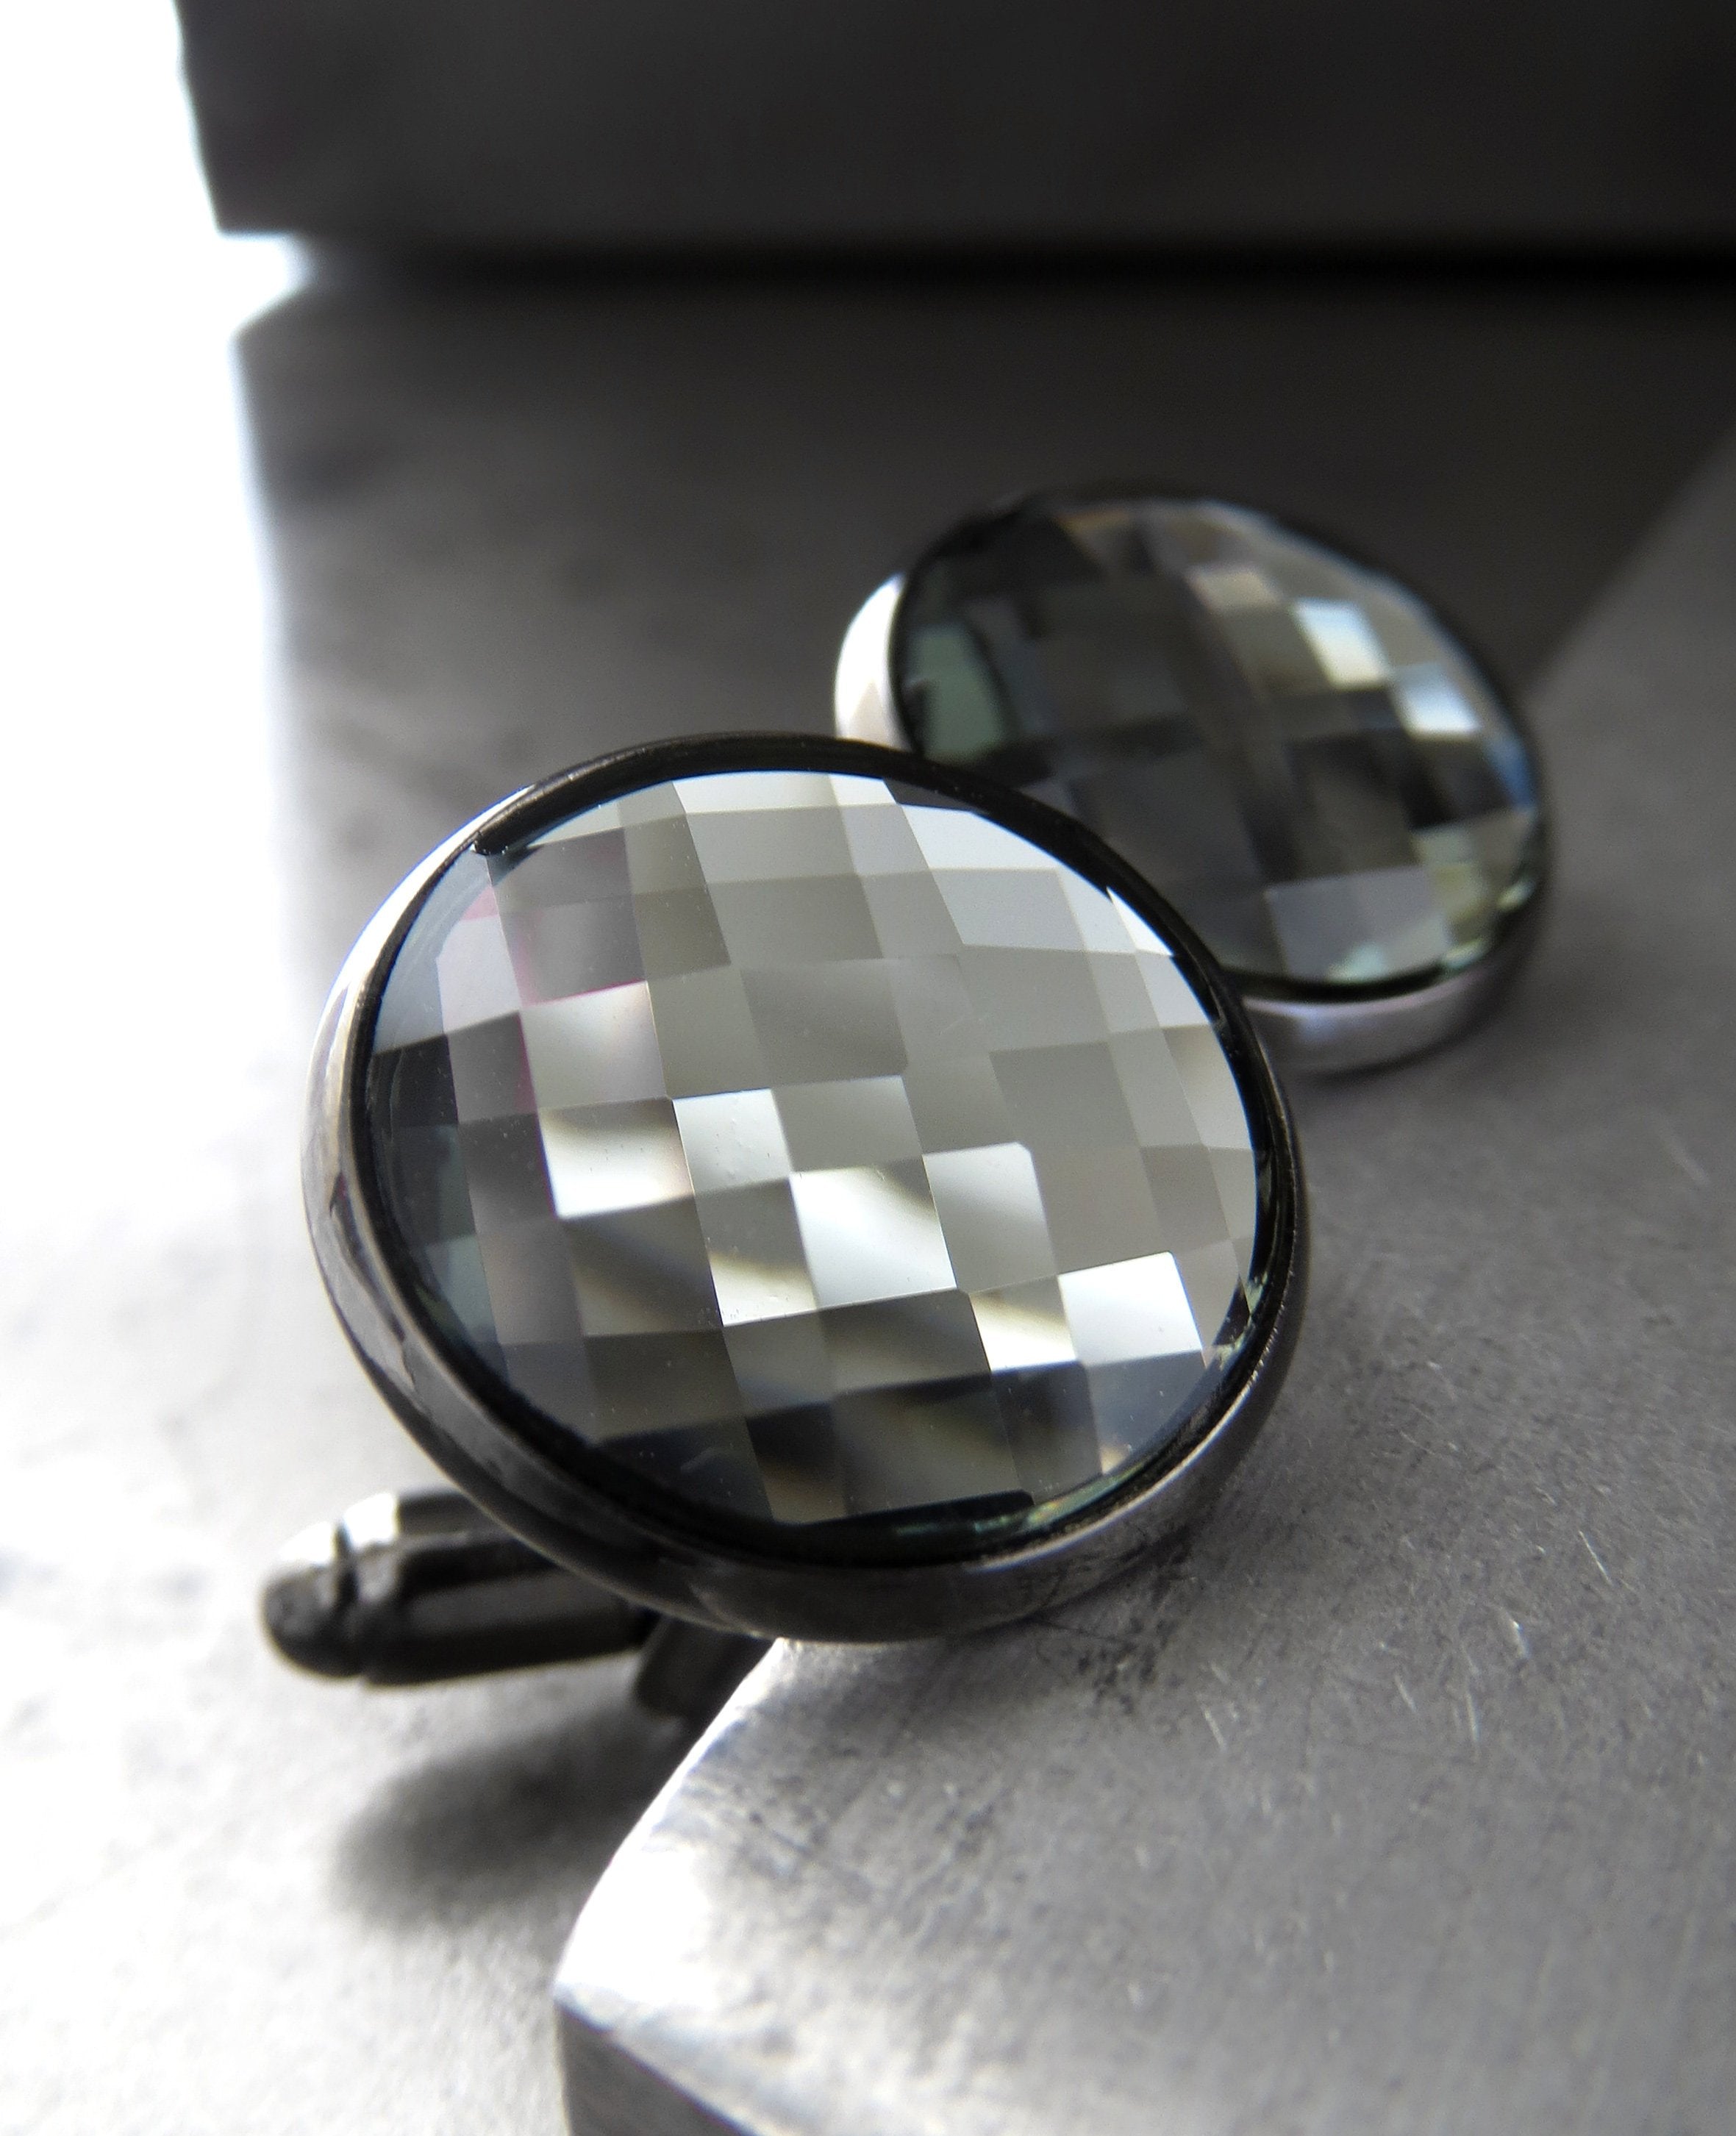 Grey Mirror Cuff Links with Black Diamond Swarovski Crystal - Wedding Cufflinks, Gift for Groom, Groomsmen, Husband, Boyfriend, Fathers Day